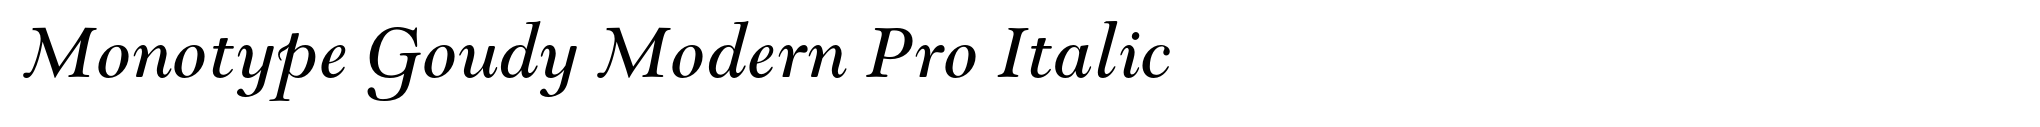 Monotype Goudy Modern Pro Italic image